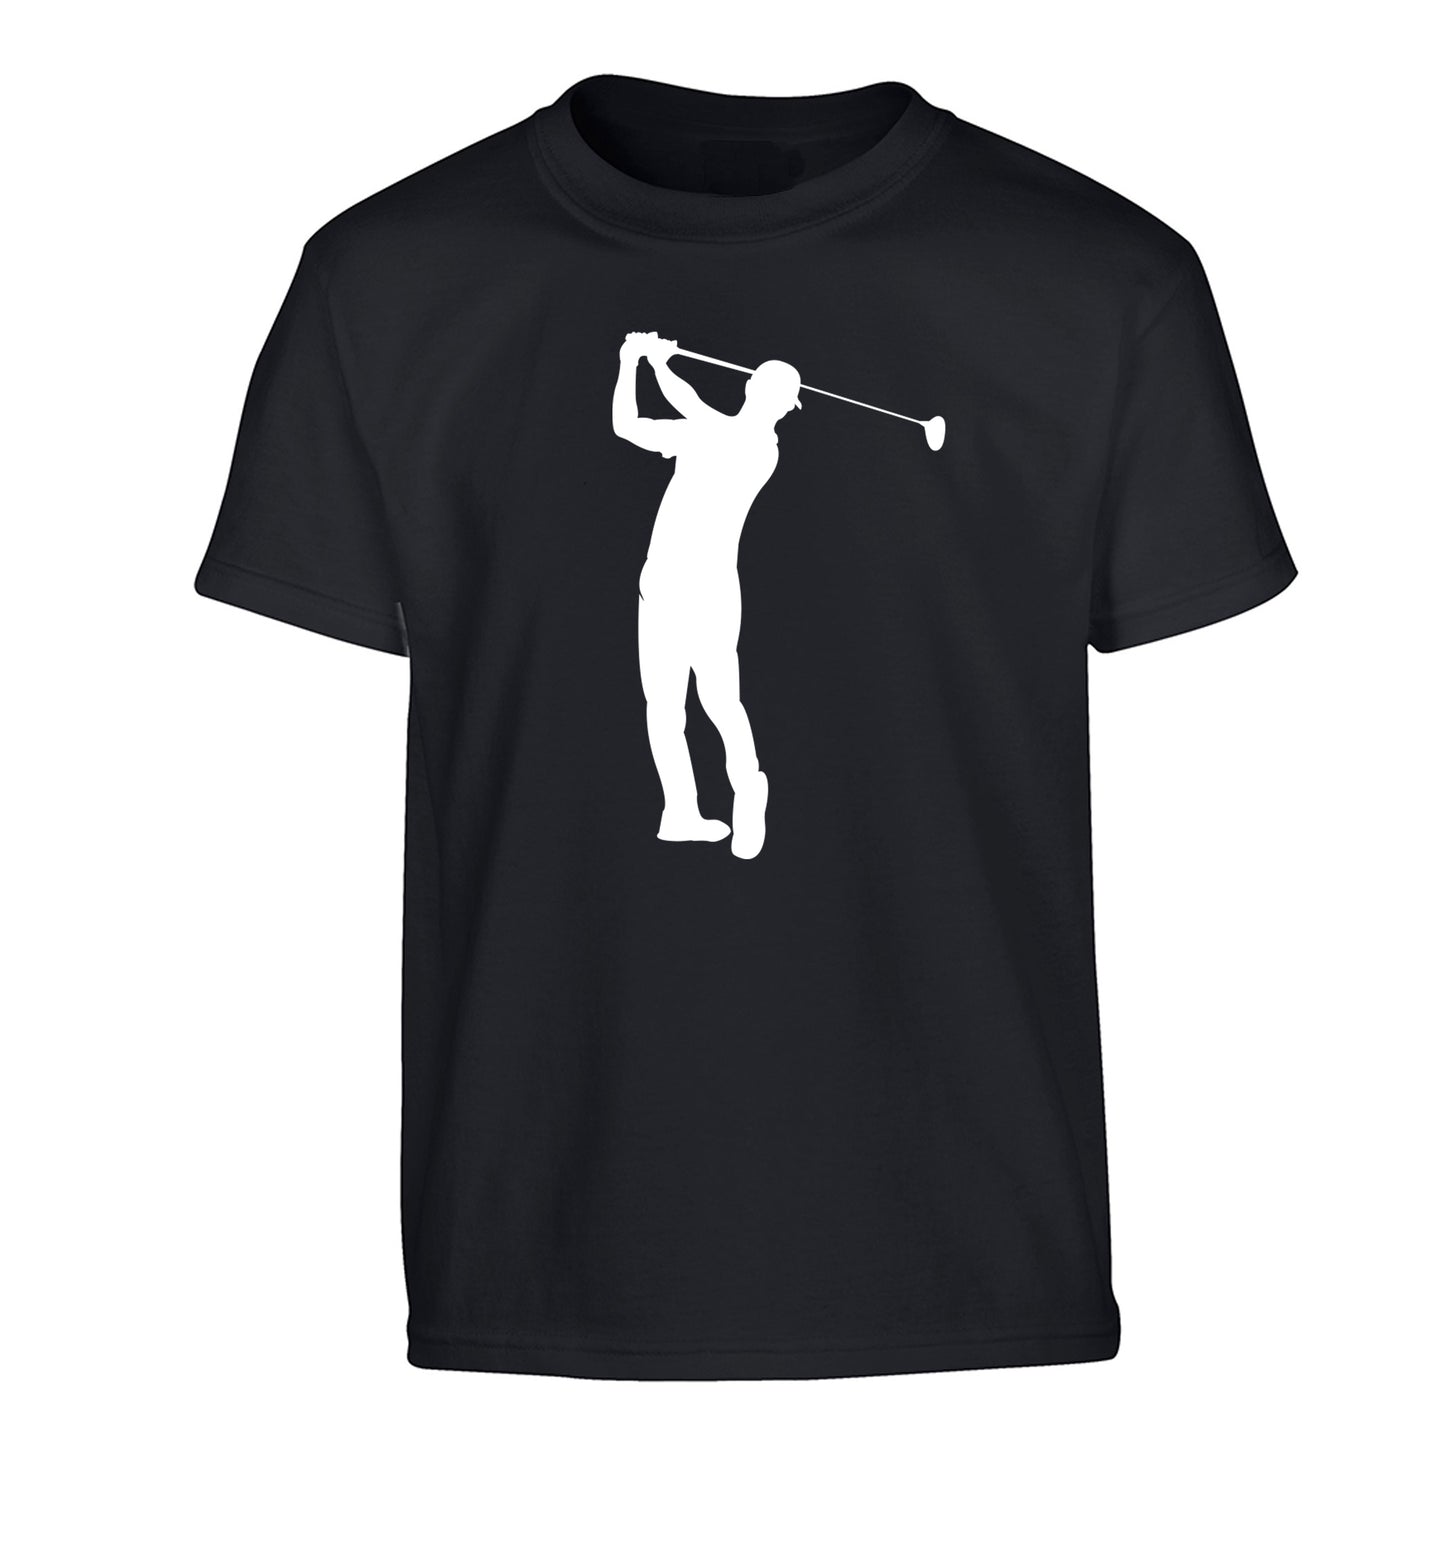 Golfer Illustration Children's black Tshirt 12-13 Years